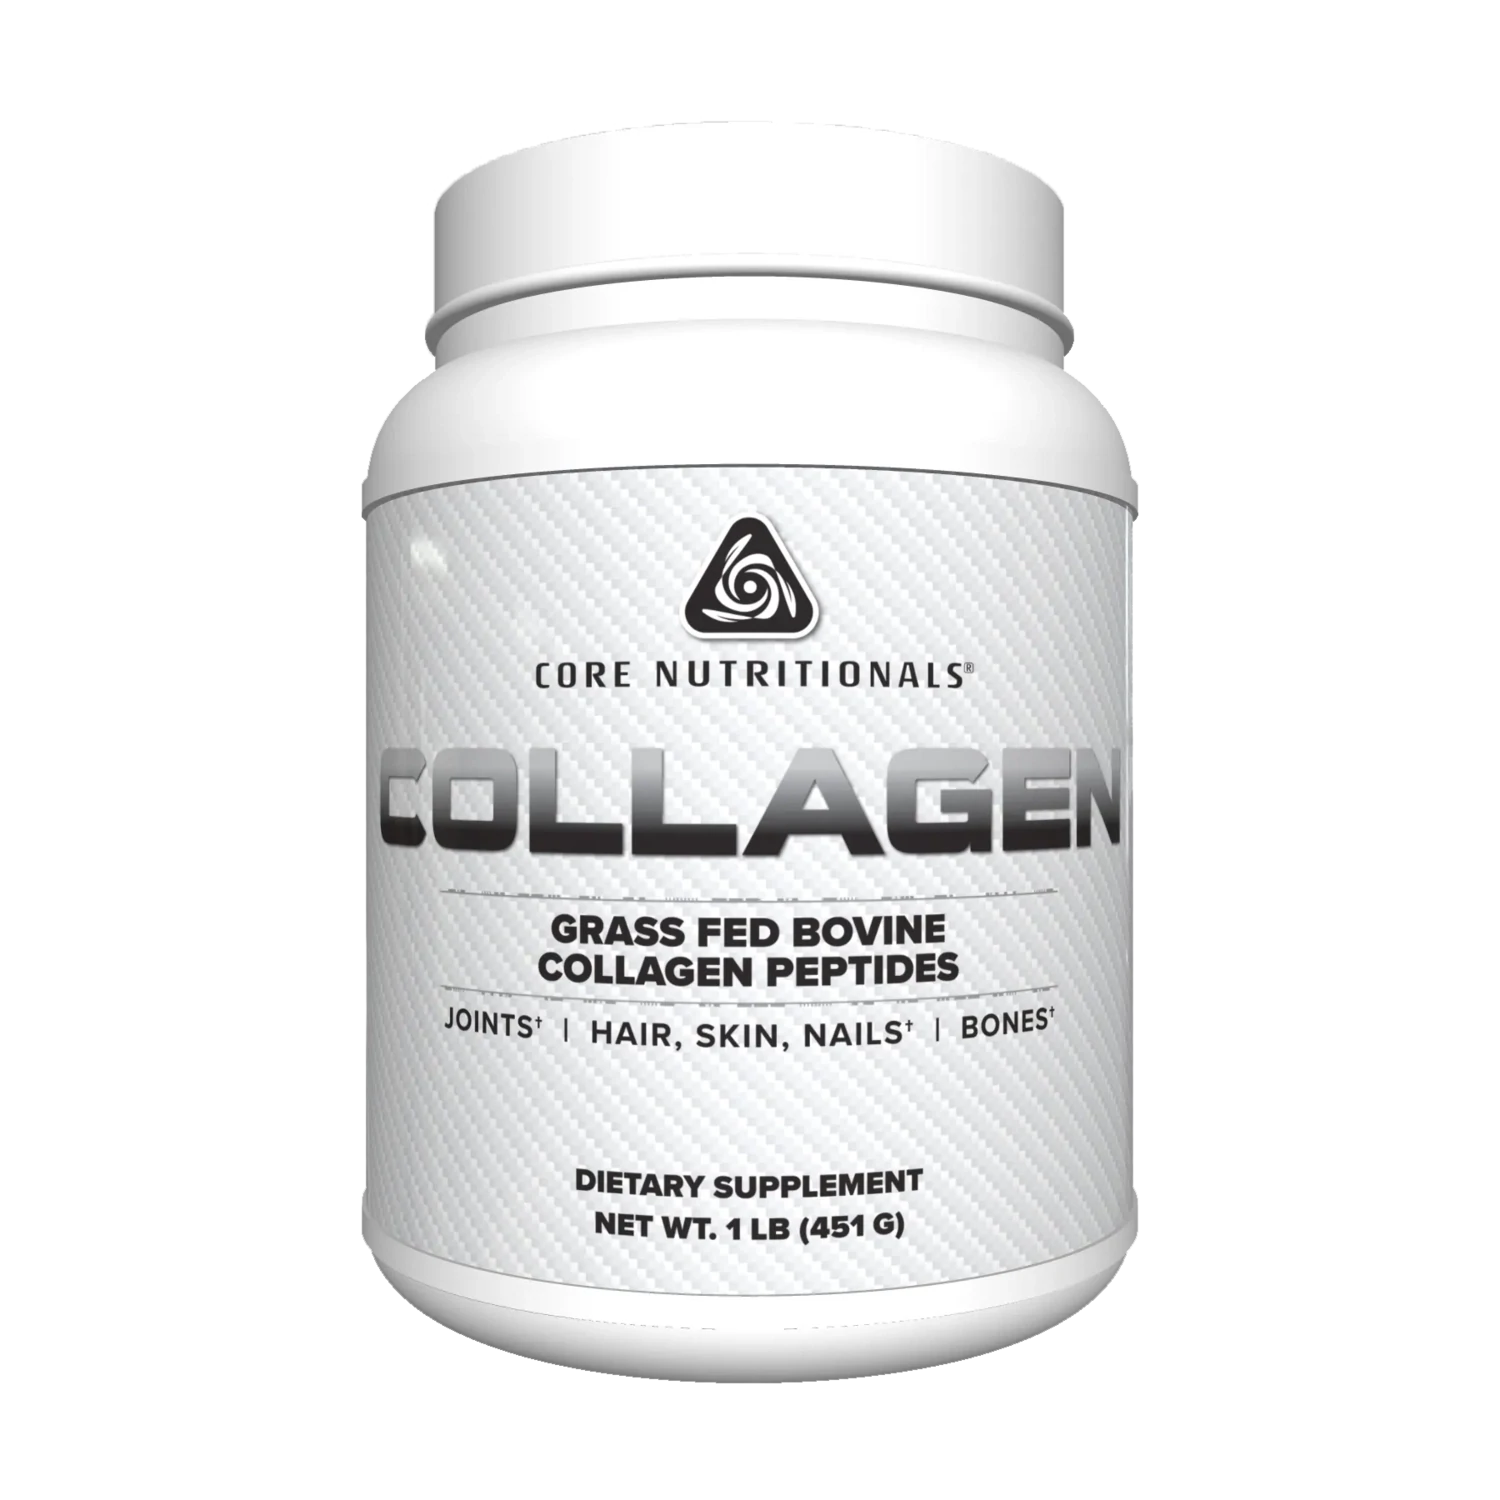 Core Nutritionals Collagen